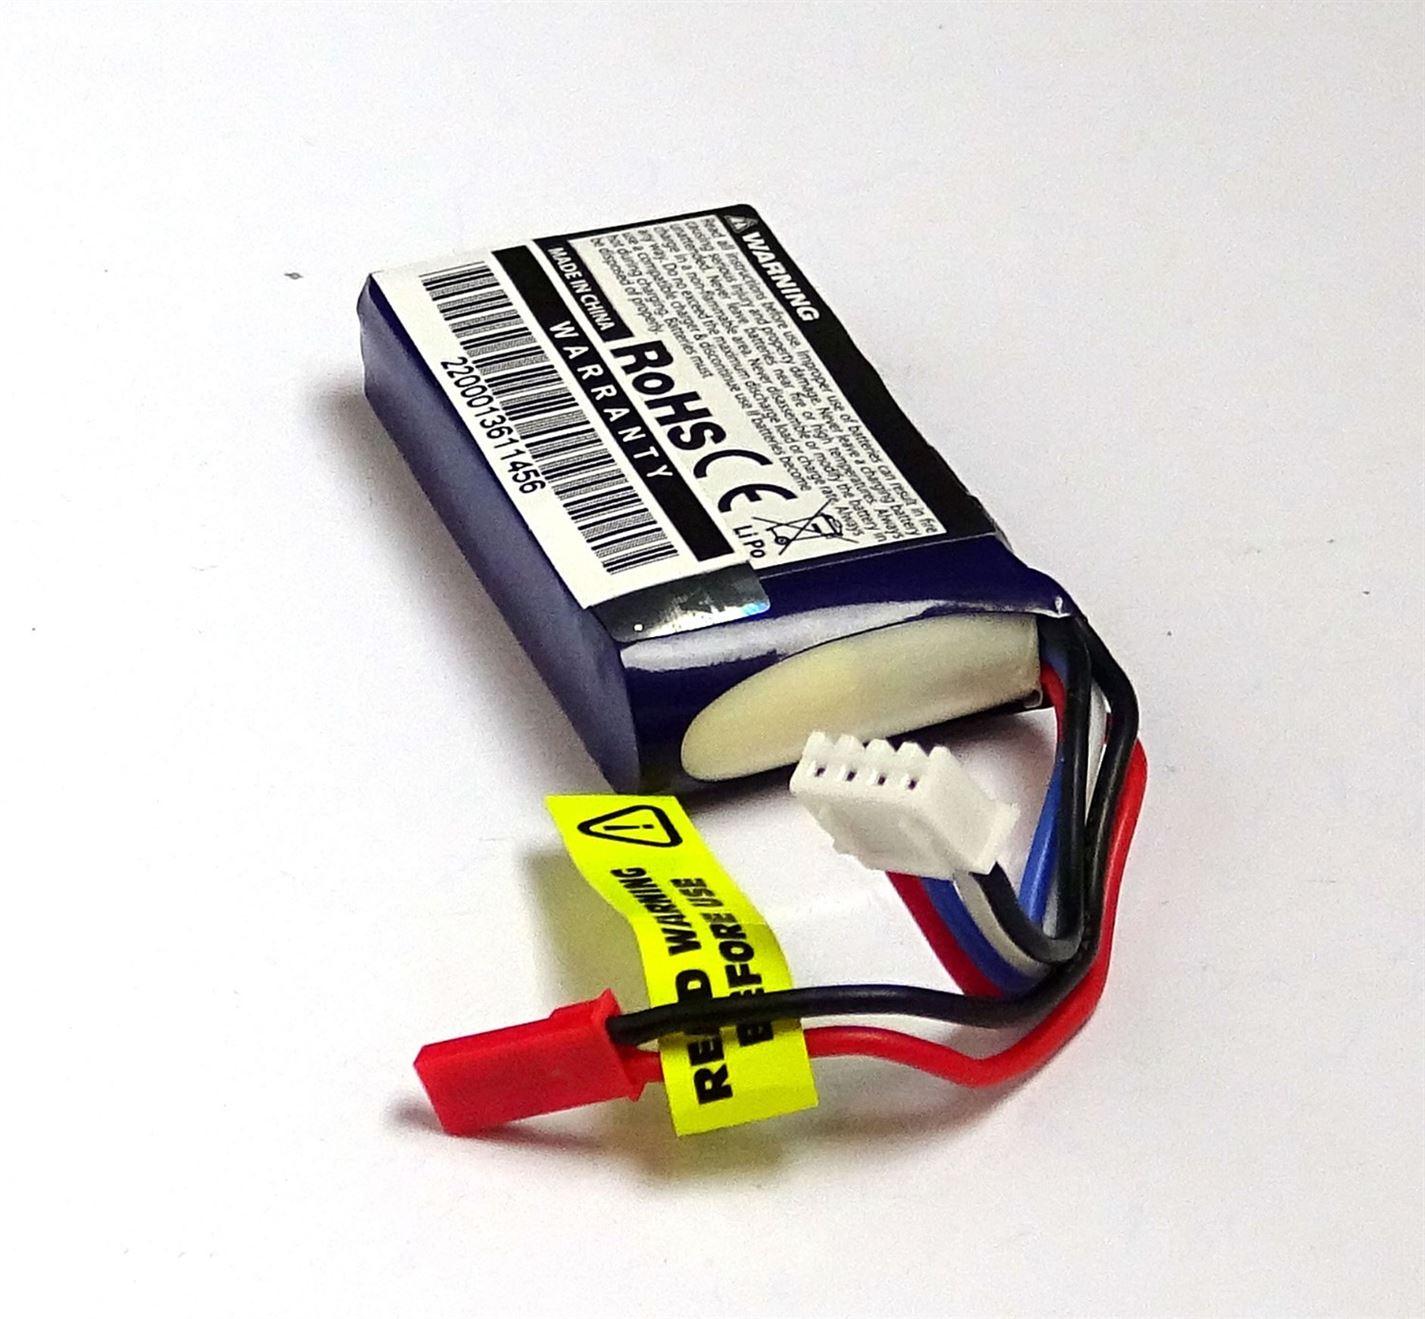 Turnigy Nano-Tech 370mah 3S 25-40C Lipo Pack Battery - UK Seller